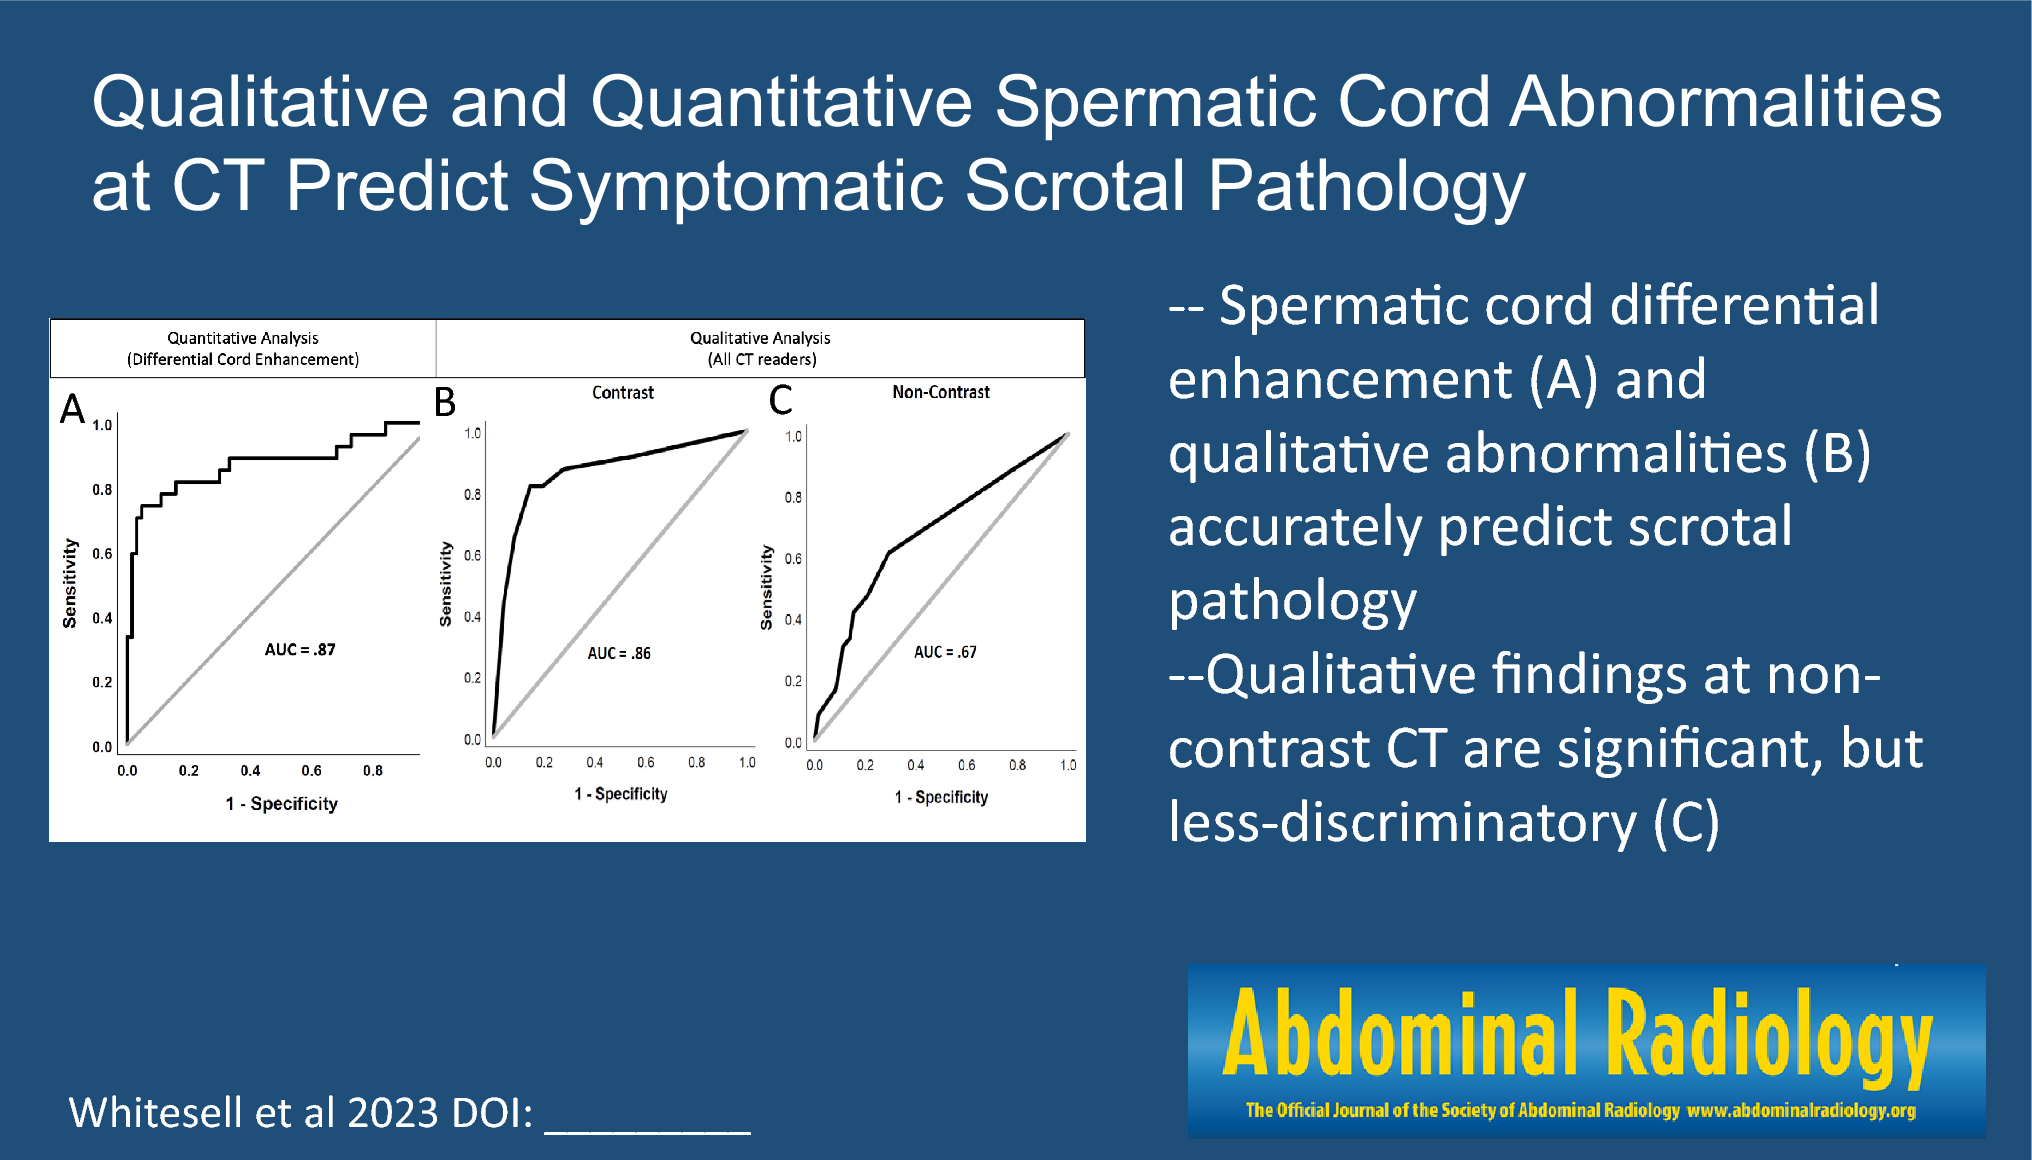 Qualitative and quantitative spermatic cord abnormalities at CT predict symptomatic scrotal pathology